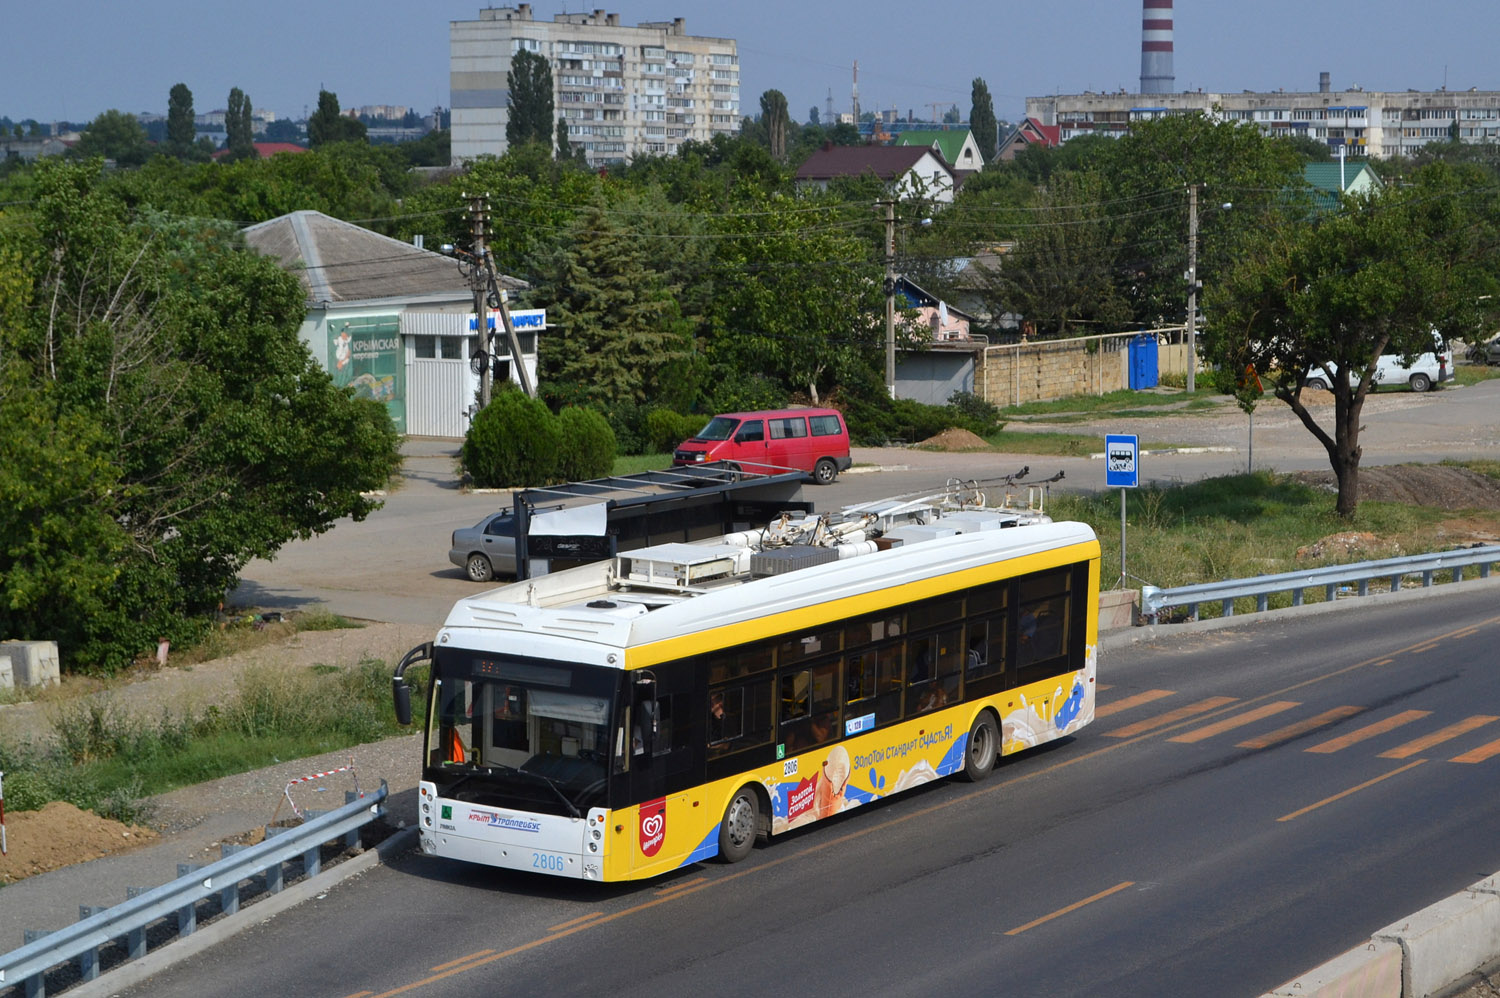 Crimean trolleybus, Trolza-5265.03 “Megapolis” № 2806; Crimean trolleybus — The movement of trolleybuses without CS (autonomous running).